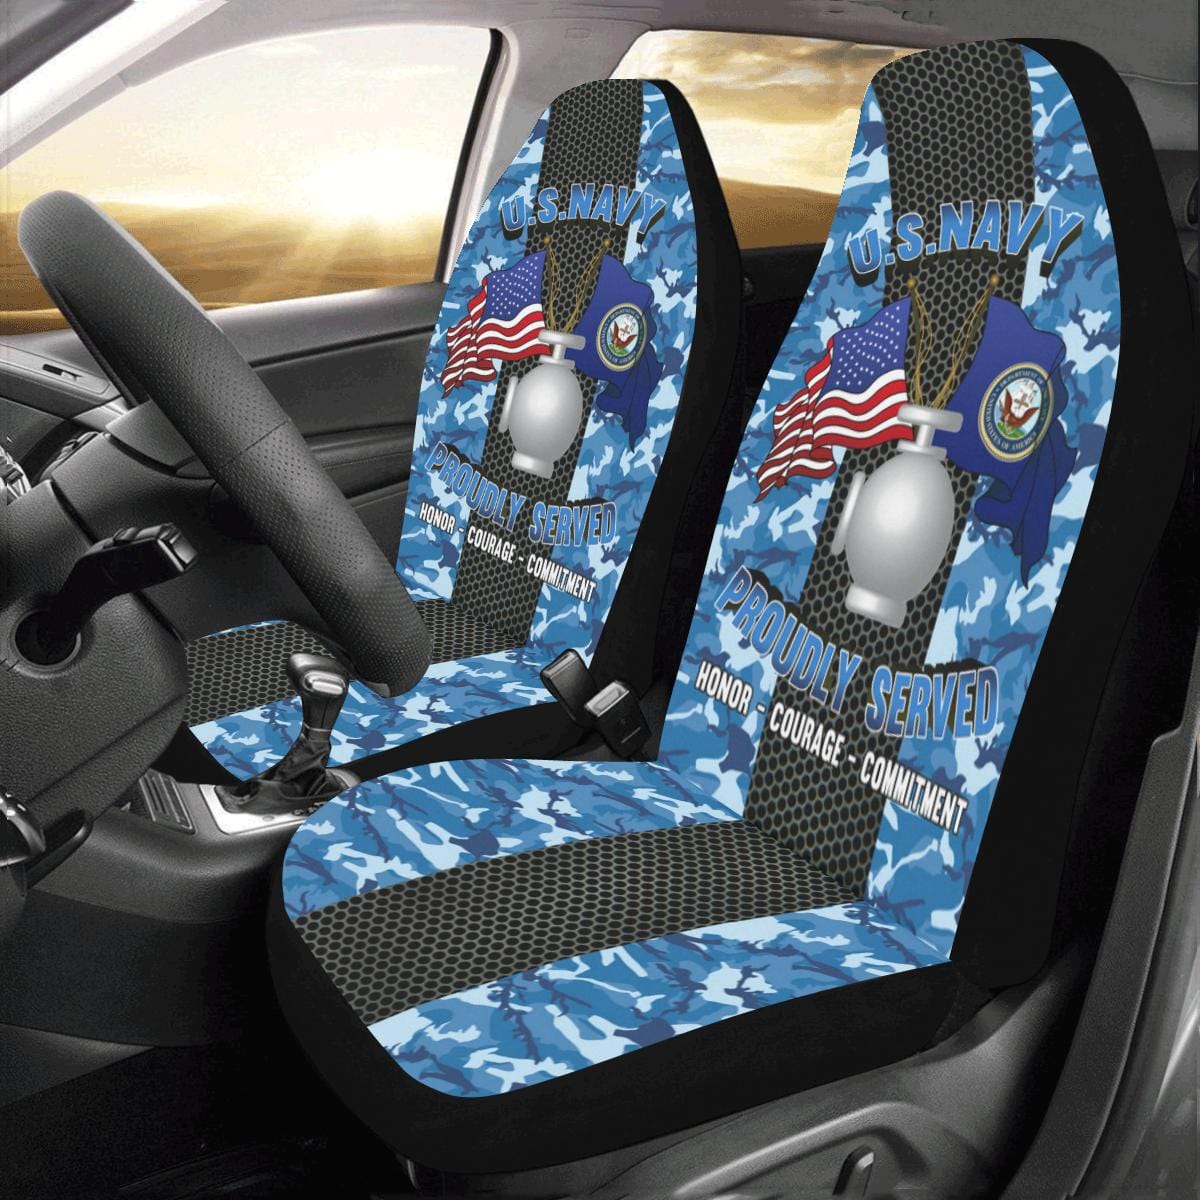 Navy Utilitiesman Navy UT Car Seat Covers (Set of 2)-SeatCovers-Navy-Rate-Veterans Nation